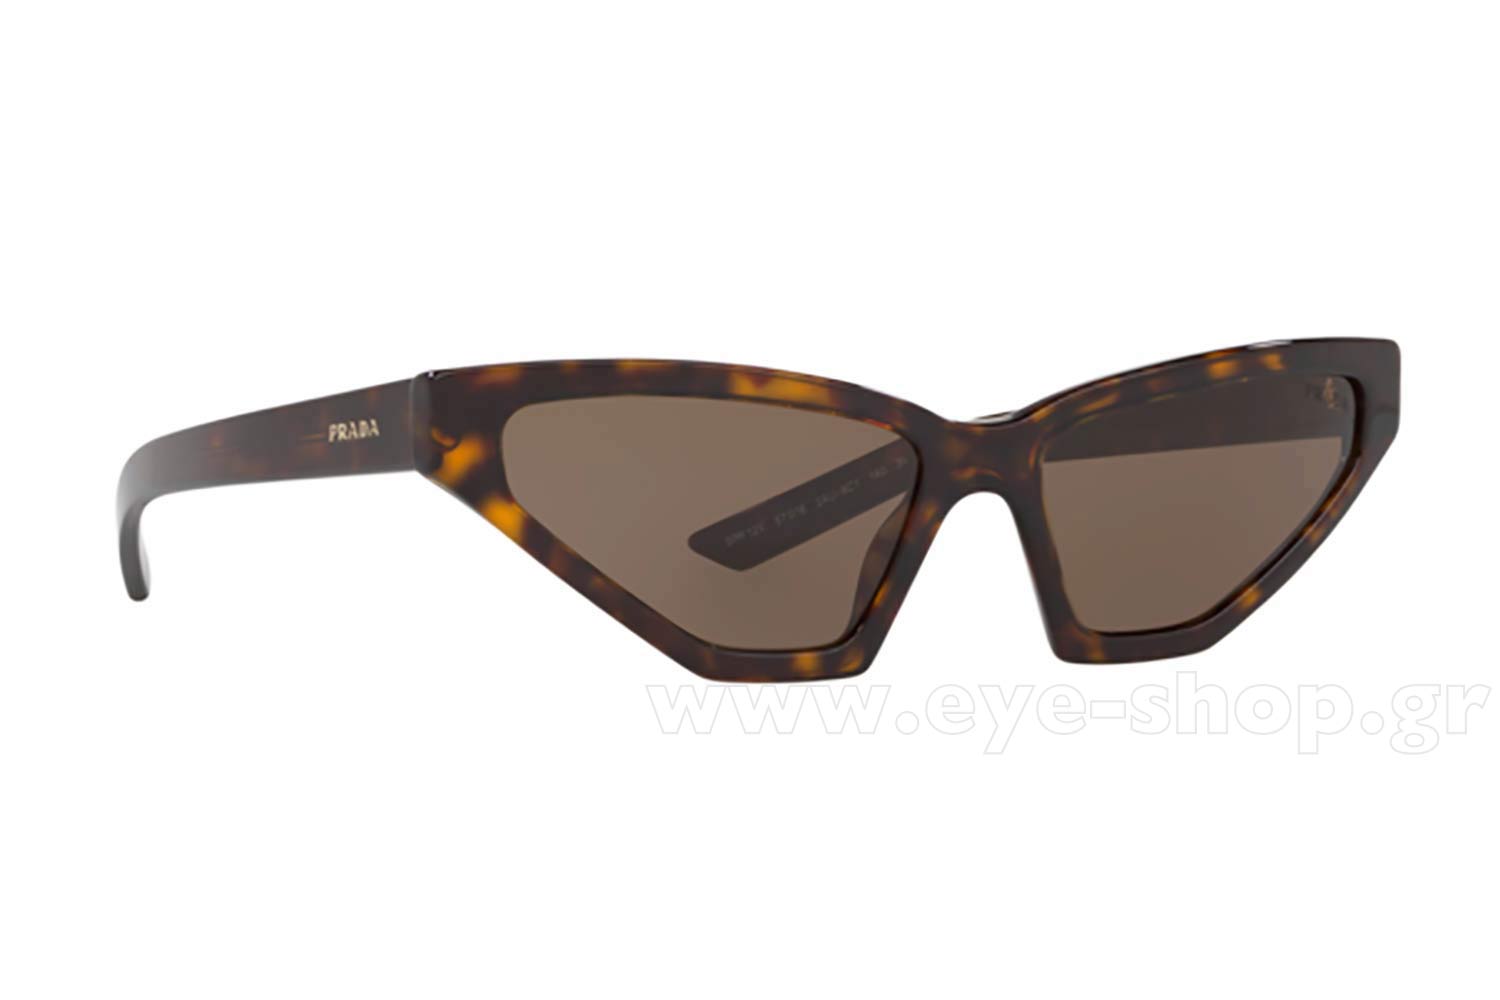 Prada | Accessories | Prada Disguise Cateye Sunglasses | Poshmark